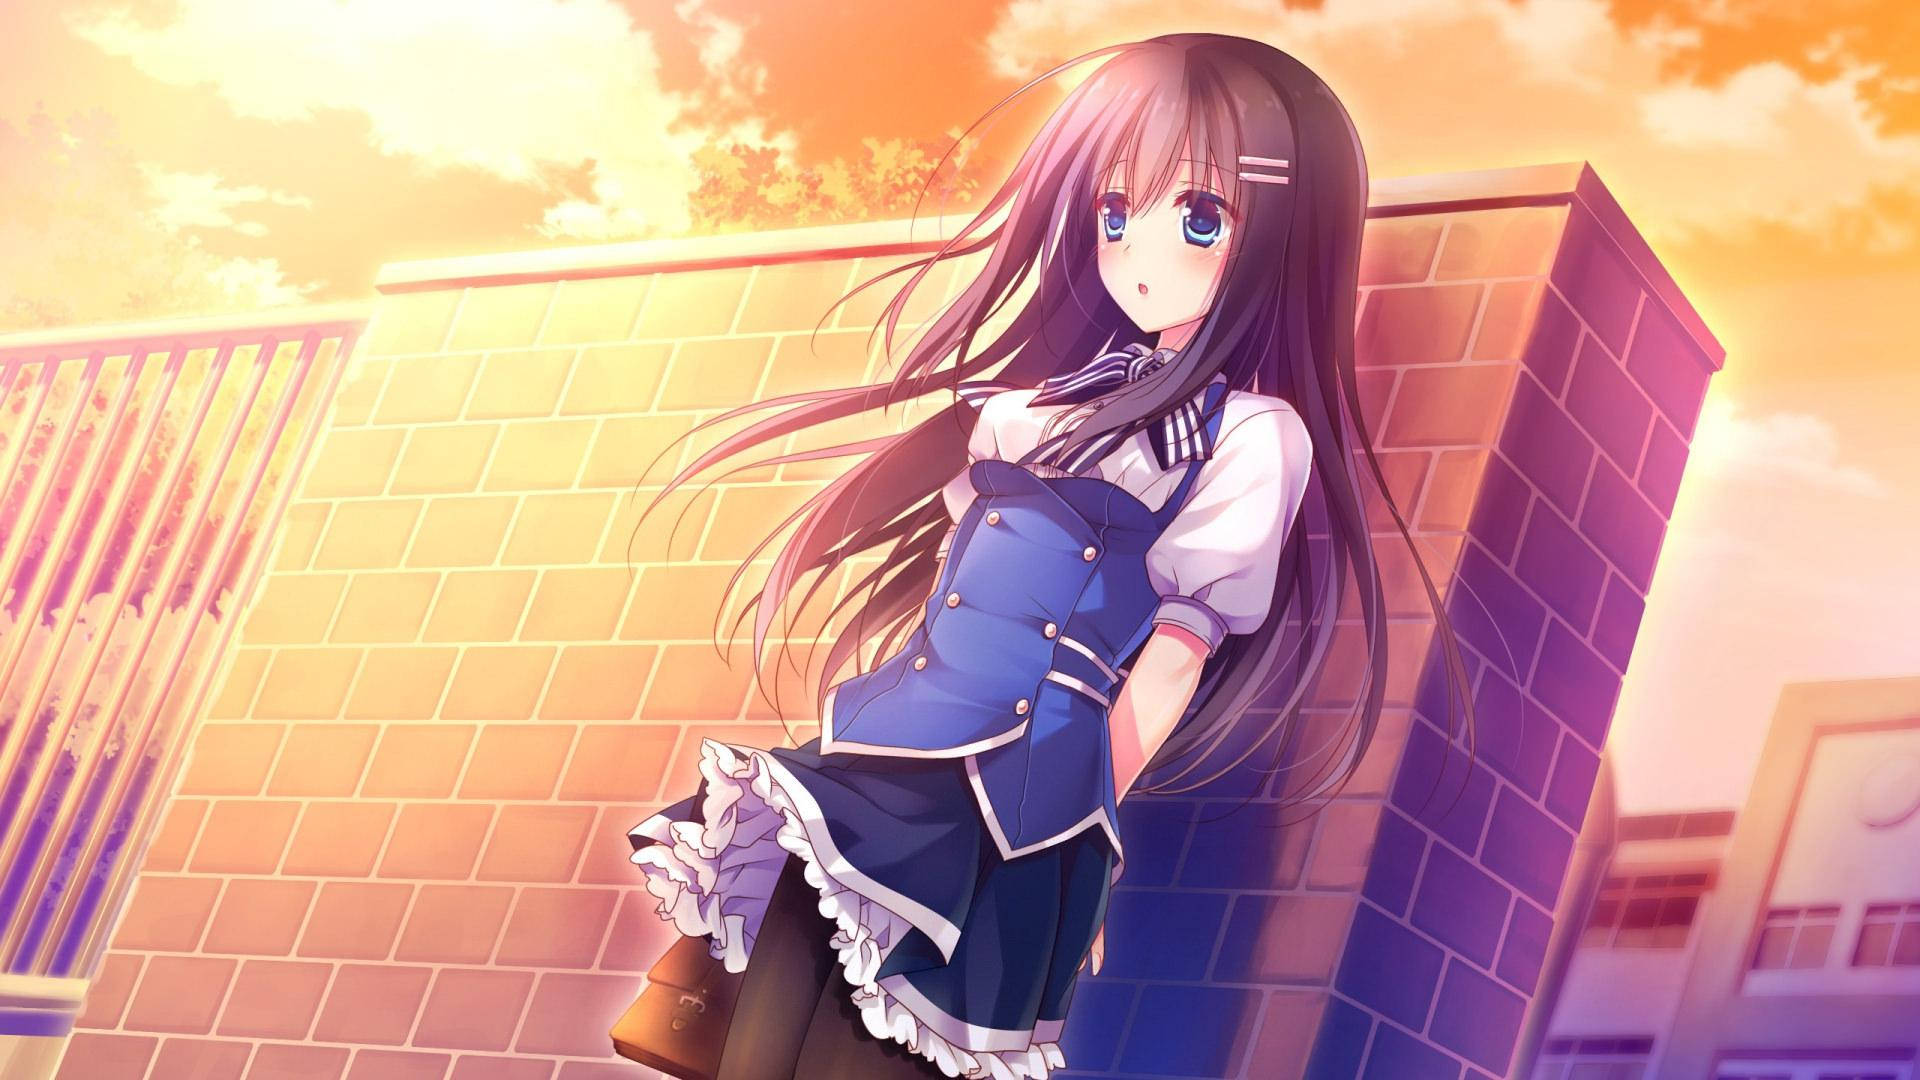 Anime School Scenery Kawaii Girl At School Gate Wallpaper